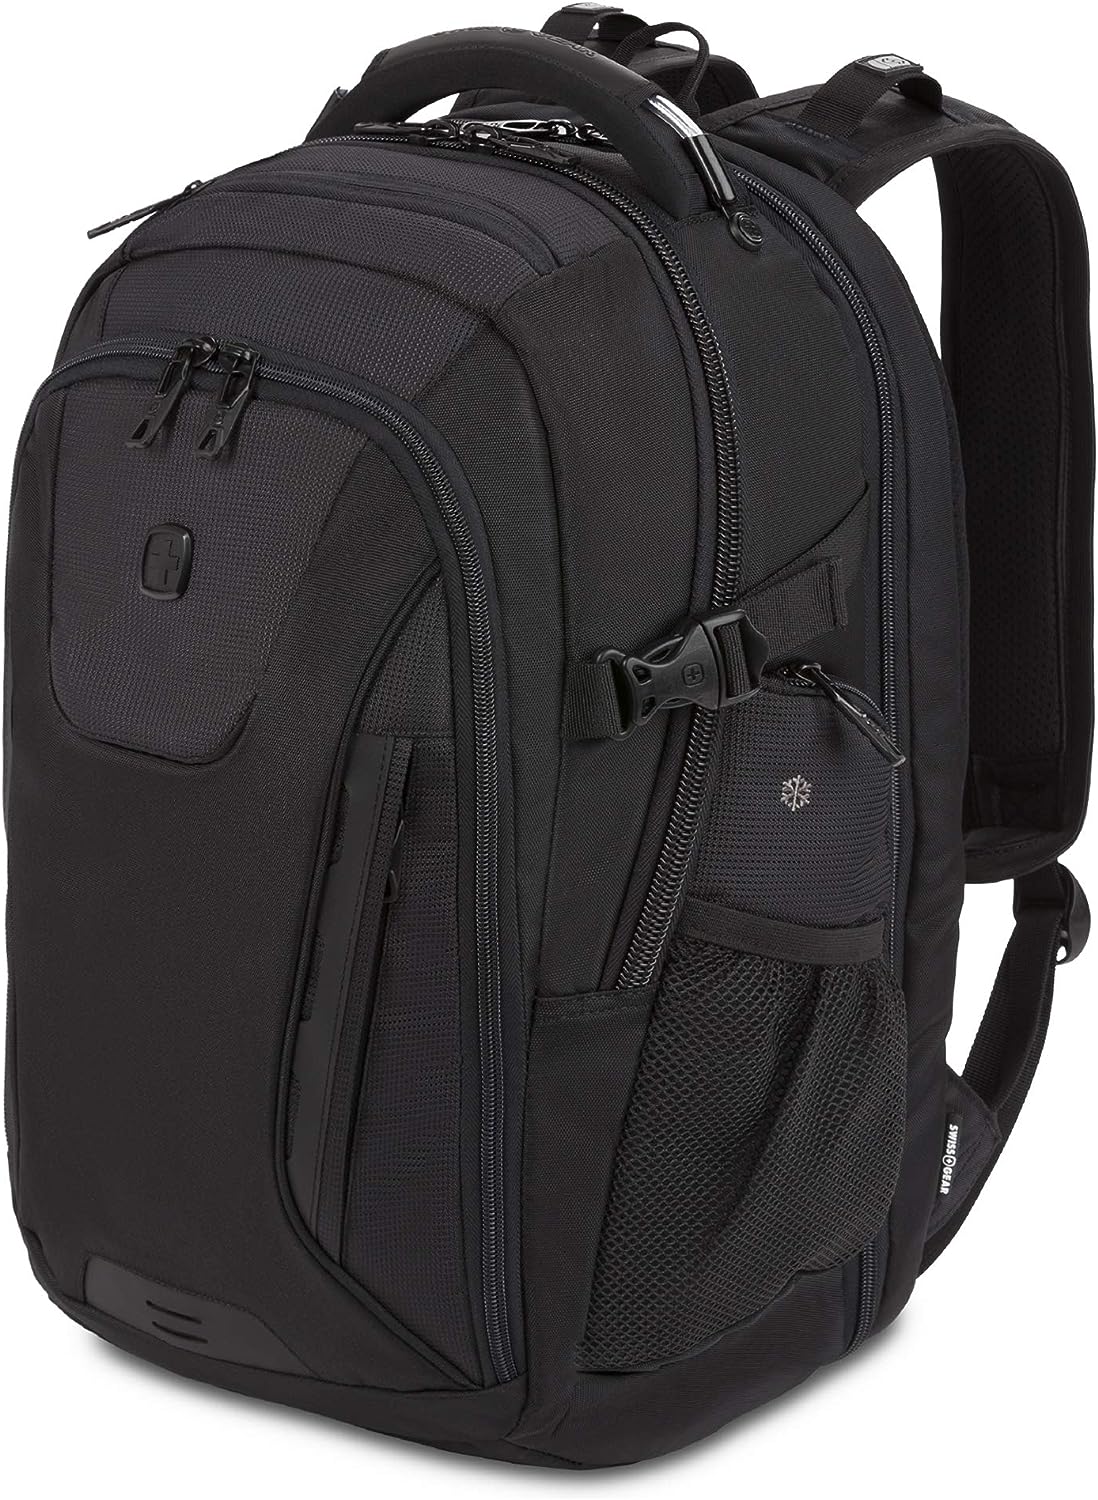 $59.99: SwissGear ScanSmart Laptop Bag, Black Stealth, Fits 15-Inch Notebook